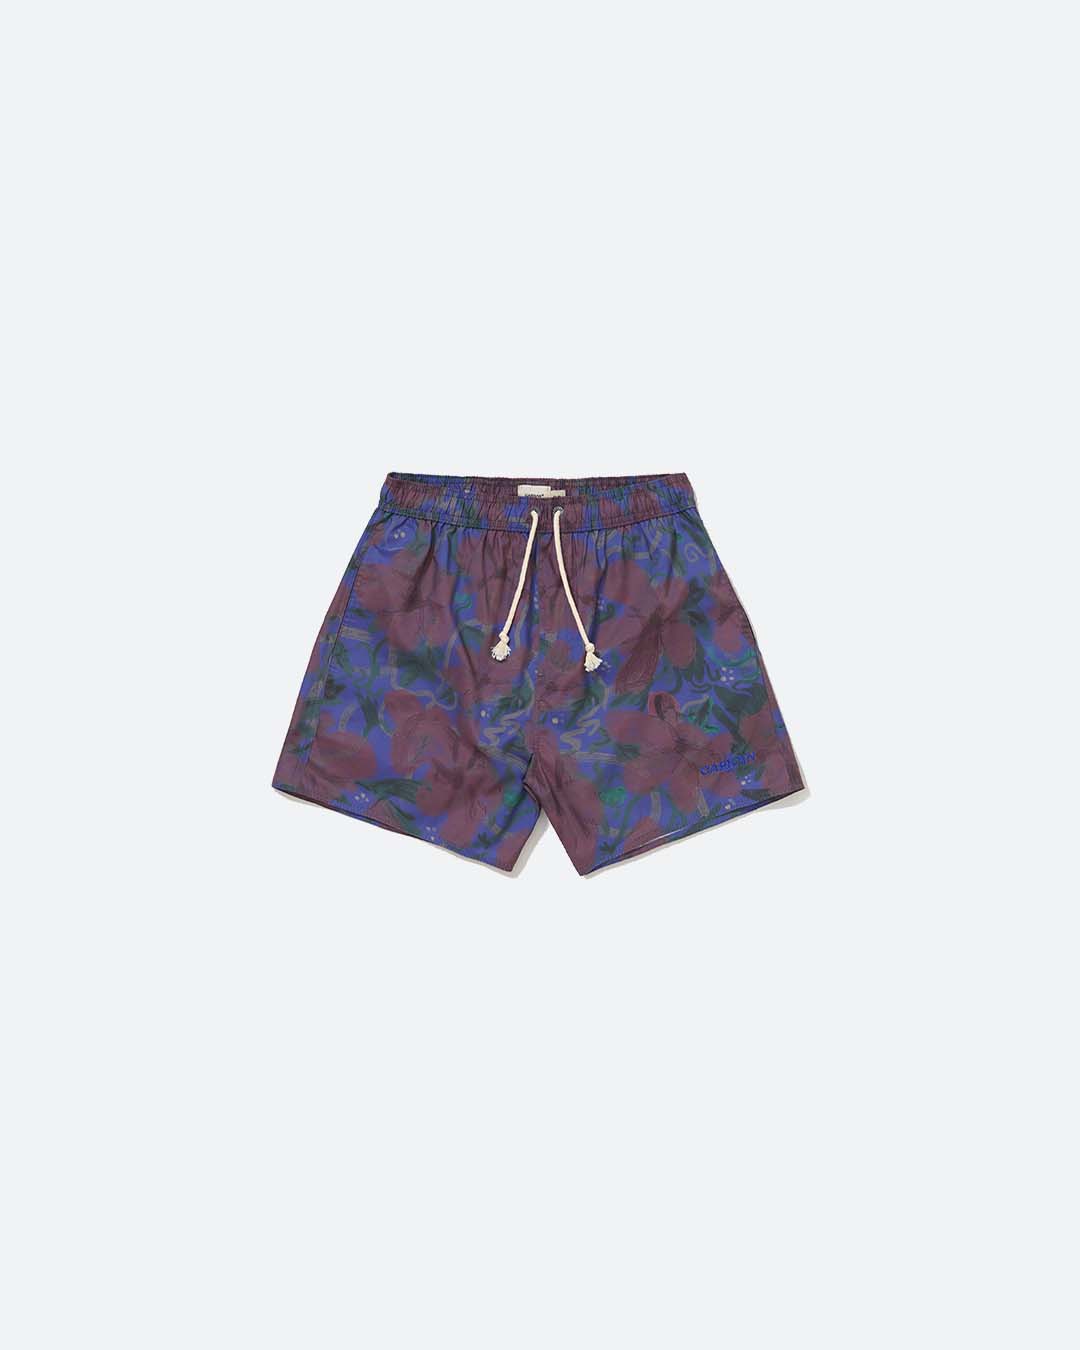 Flowered Shorts